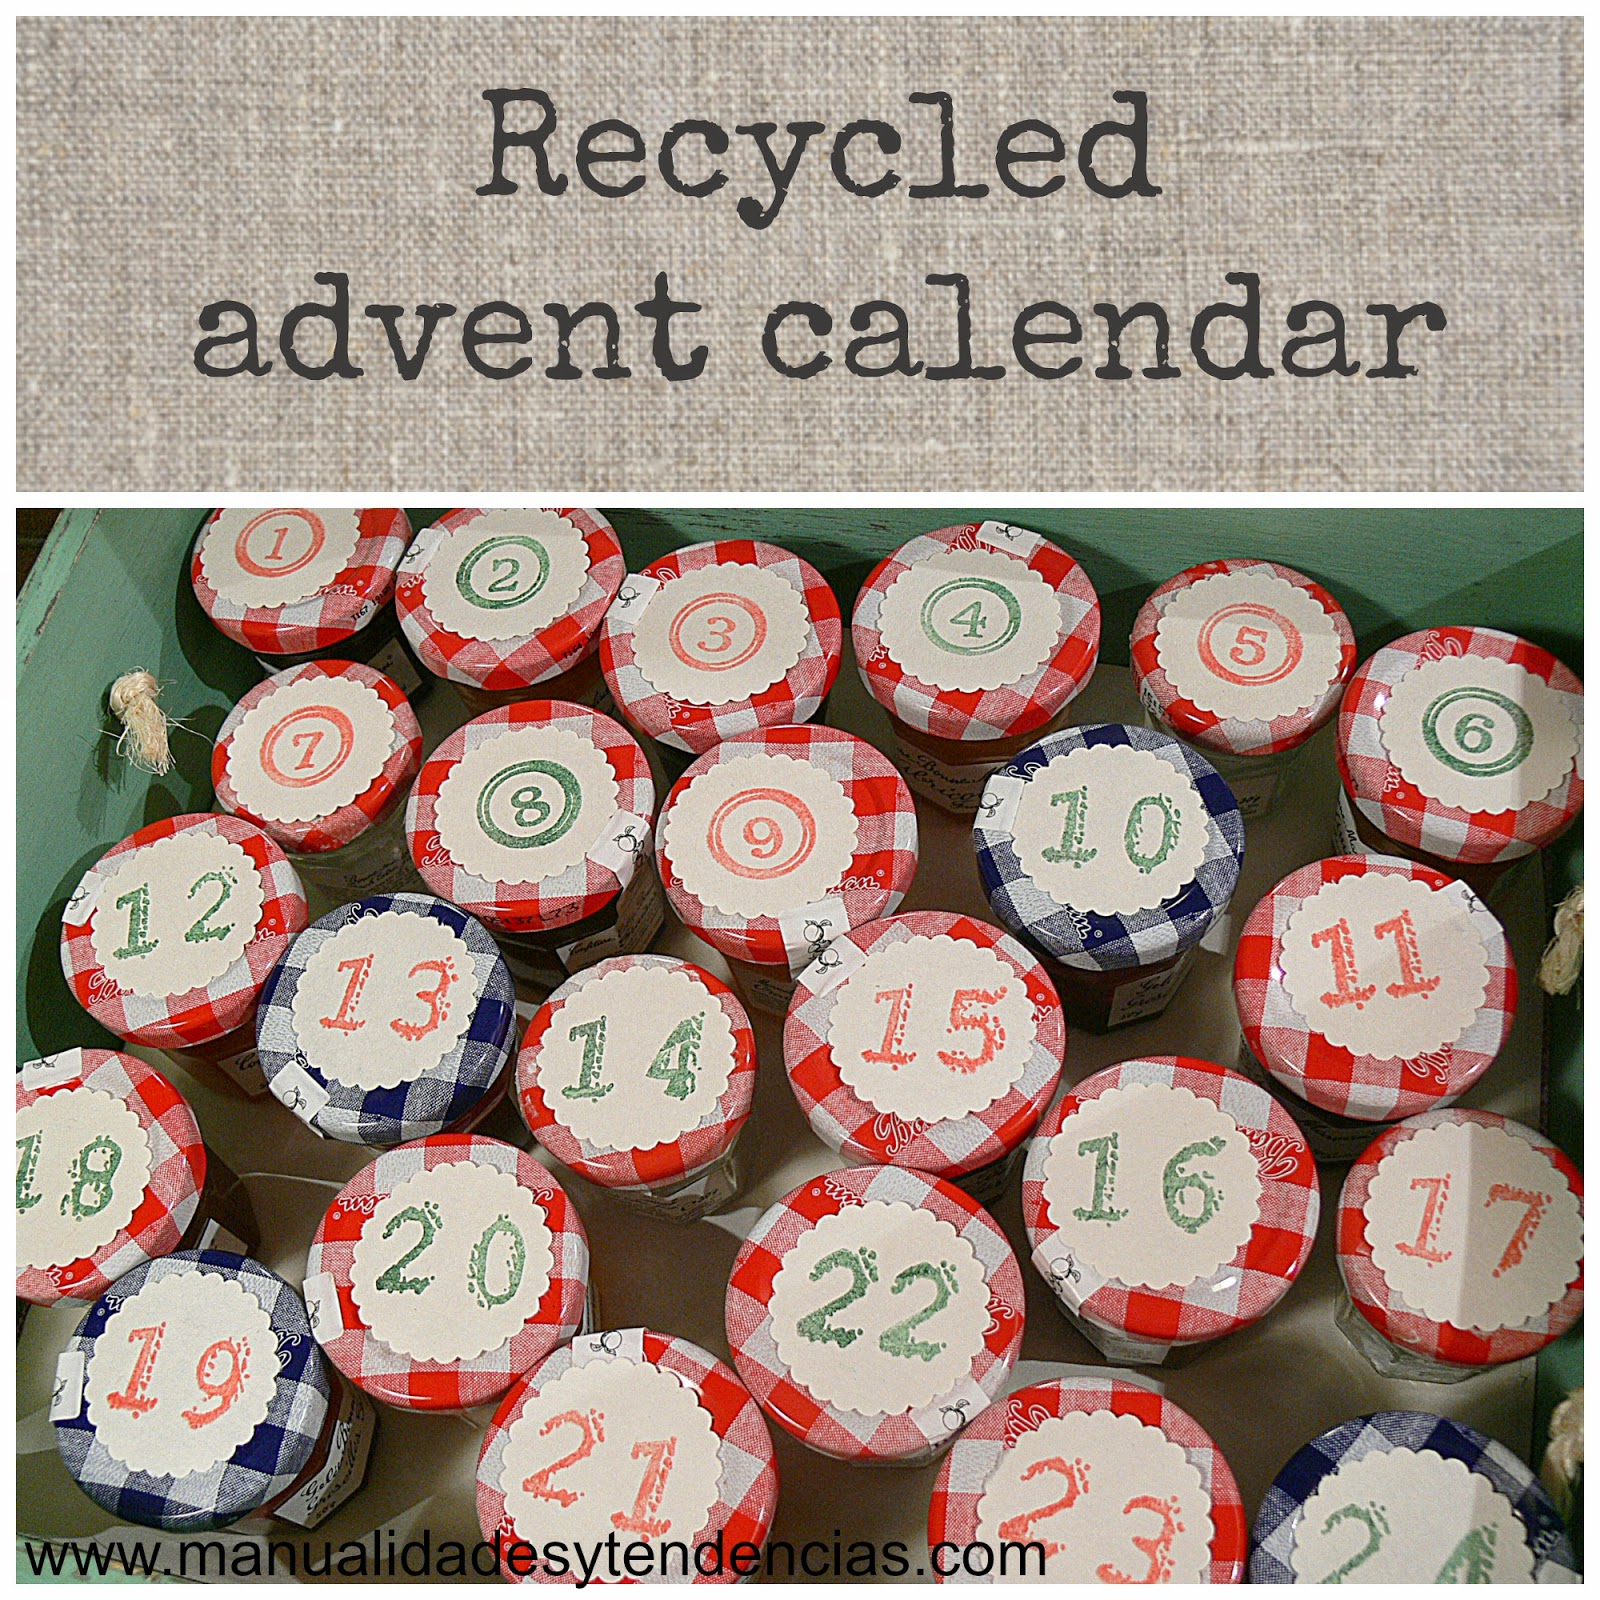 Recycled advent calendar